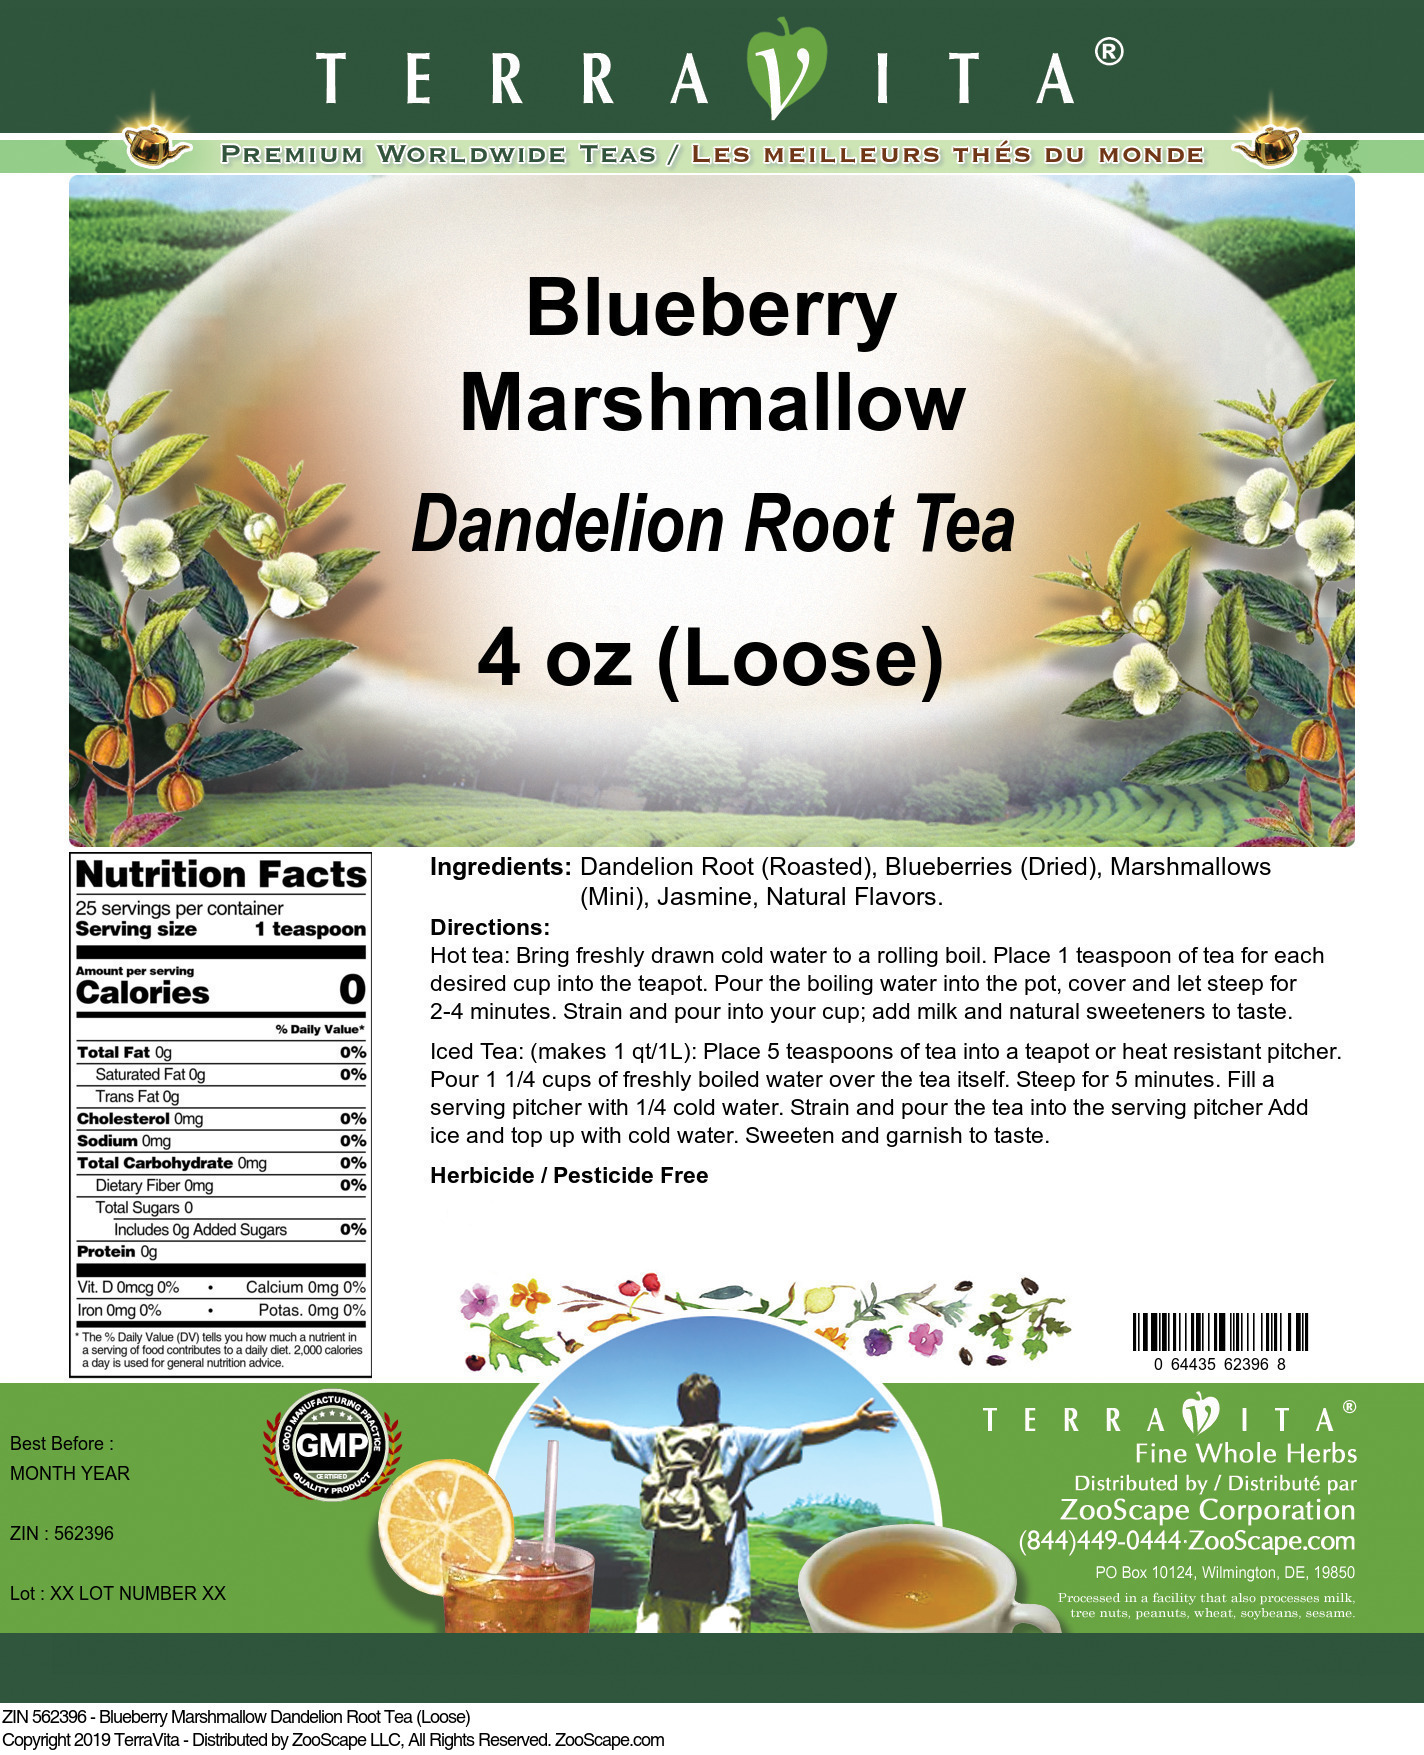 Blueberry Marshmallow Dandelion Root Tea (Loose) - Label